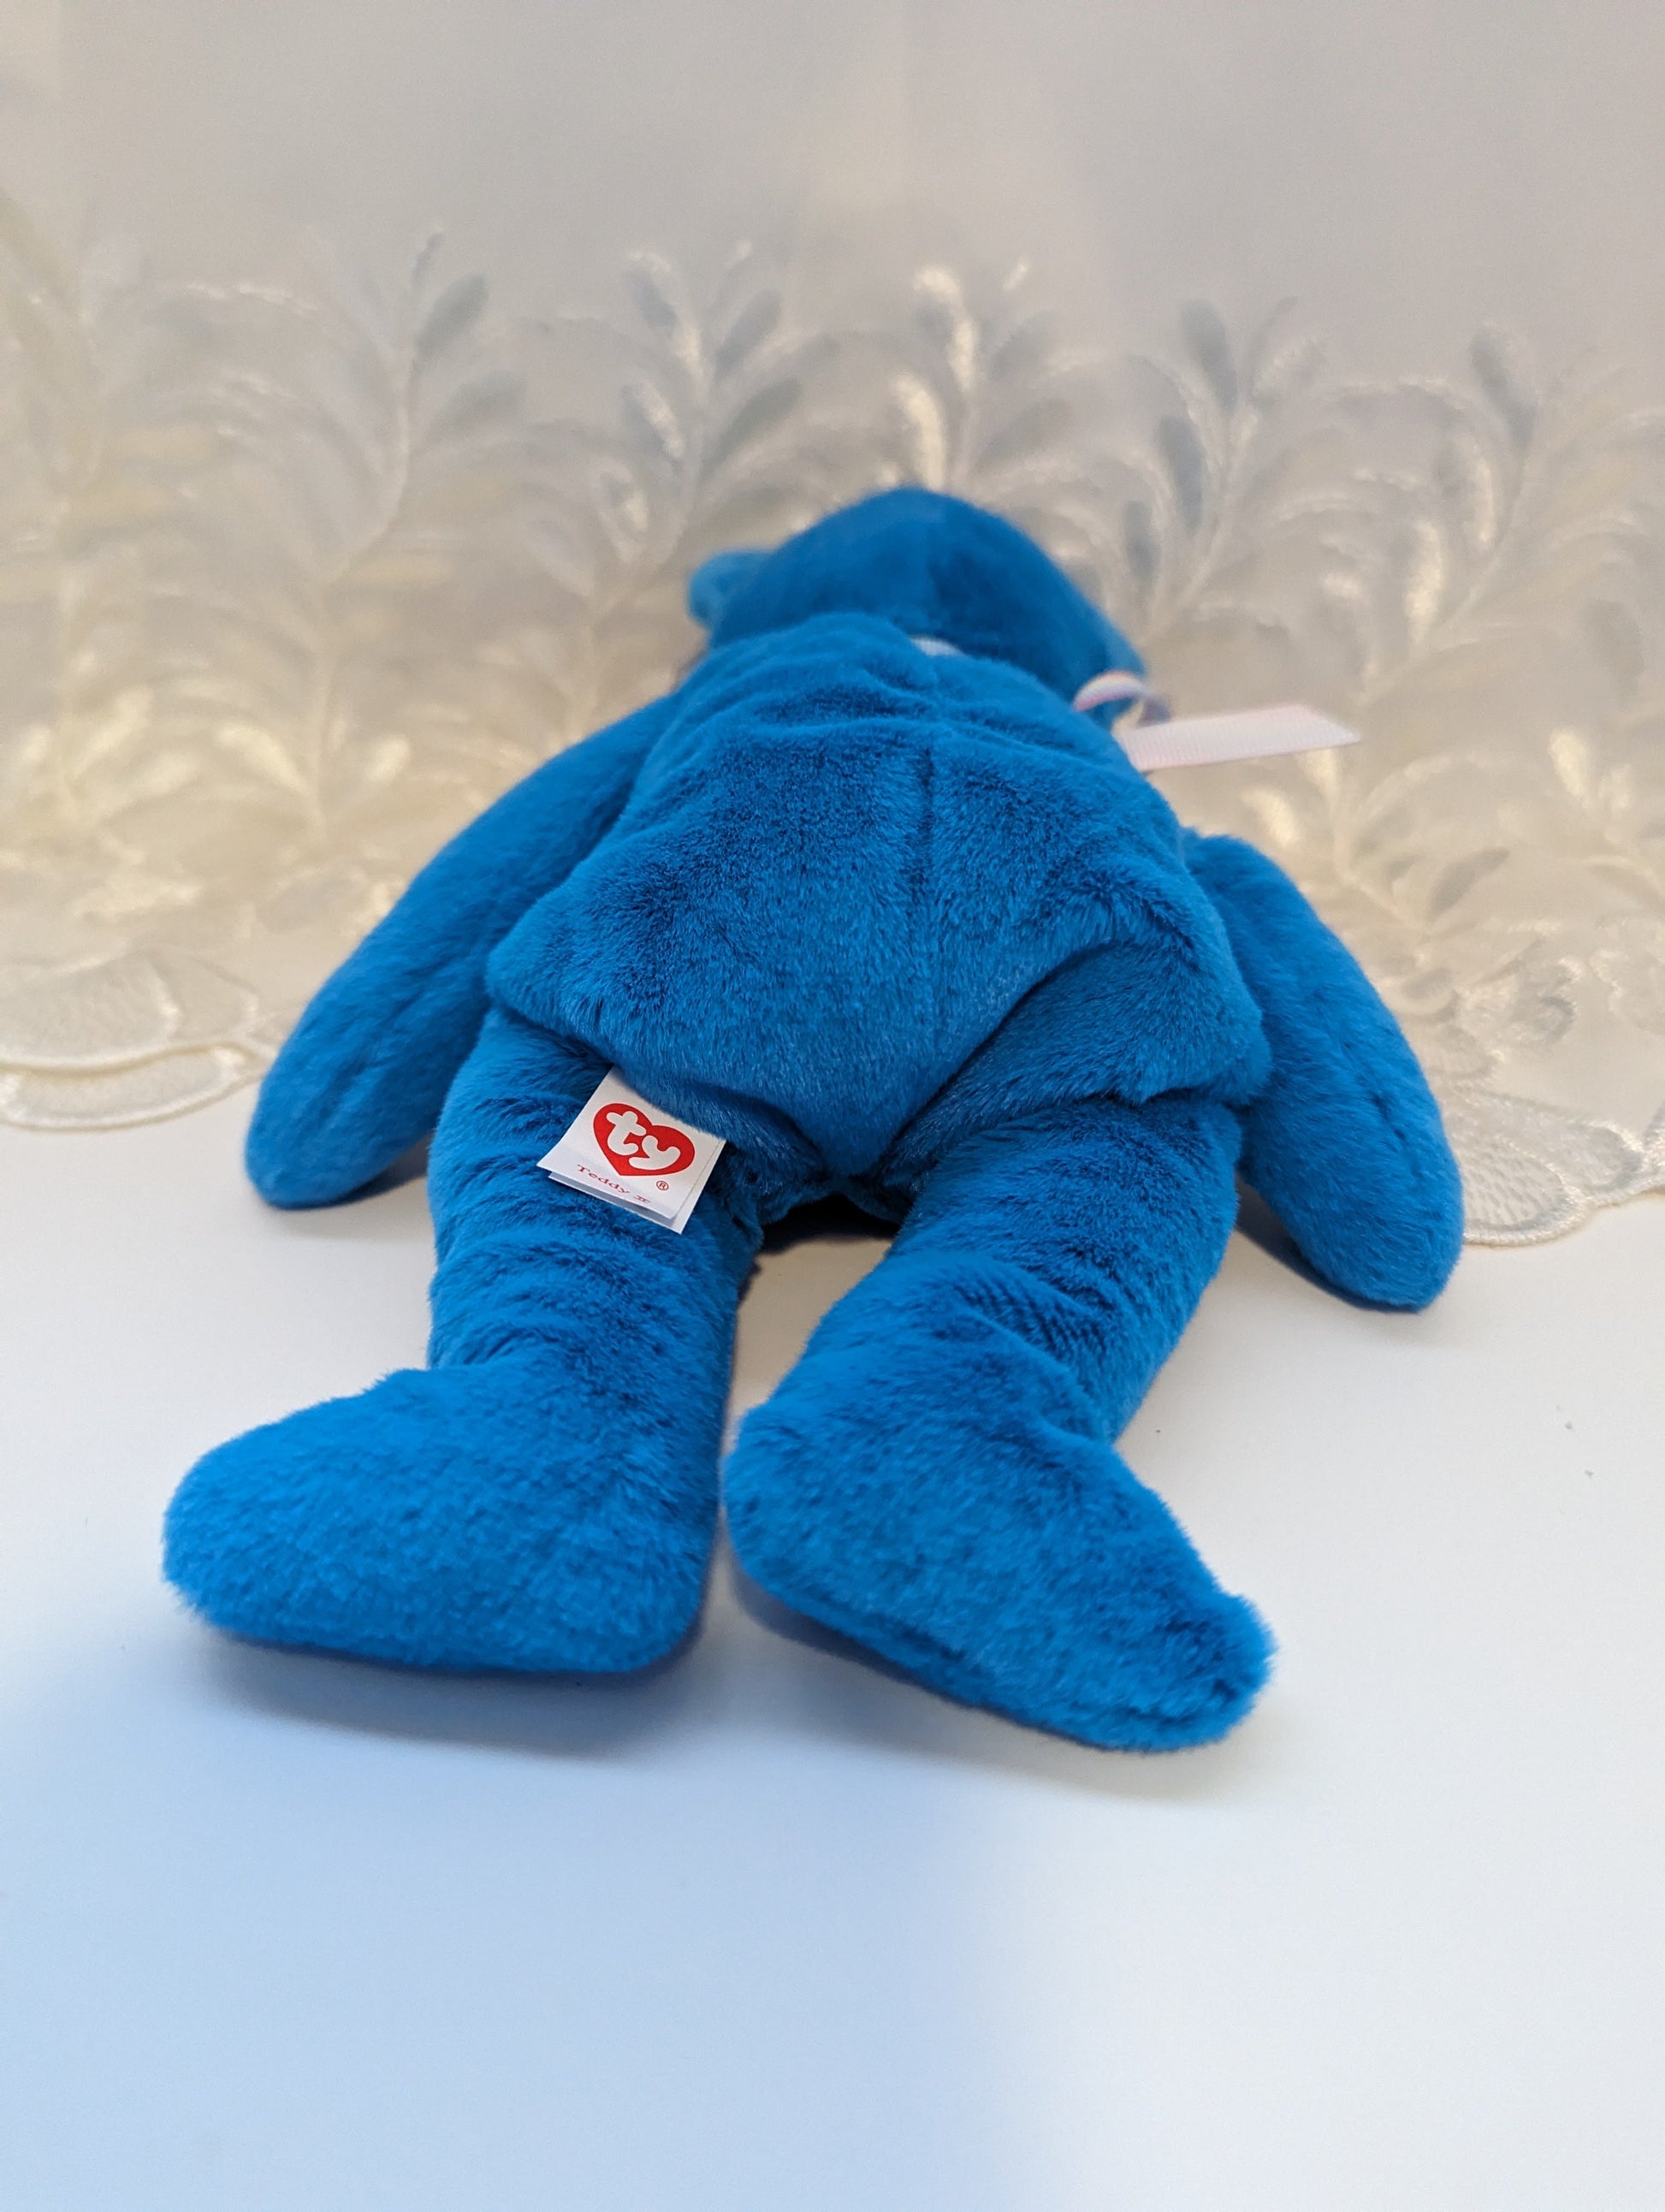 Ty Beanie Baby - Teddy II The Blue Teddy Bear (8in) 30th Anniversary - Vintage Beanies Canada